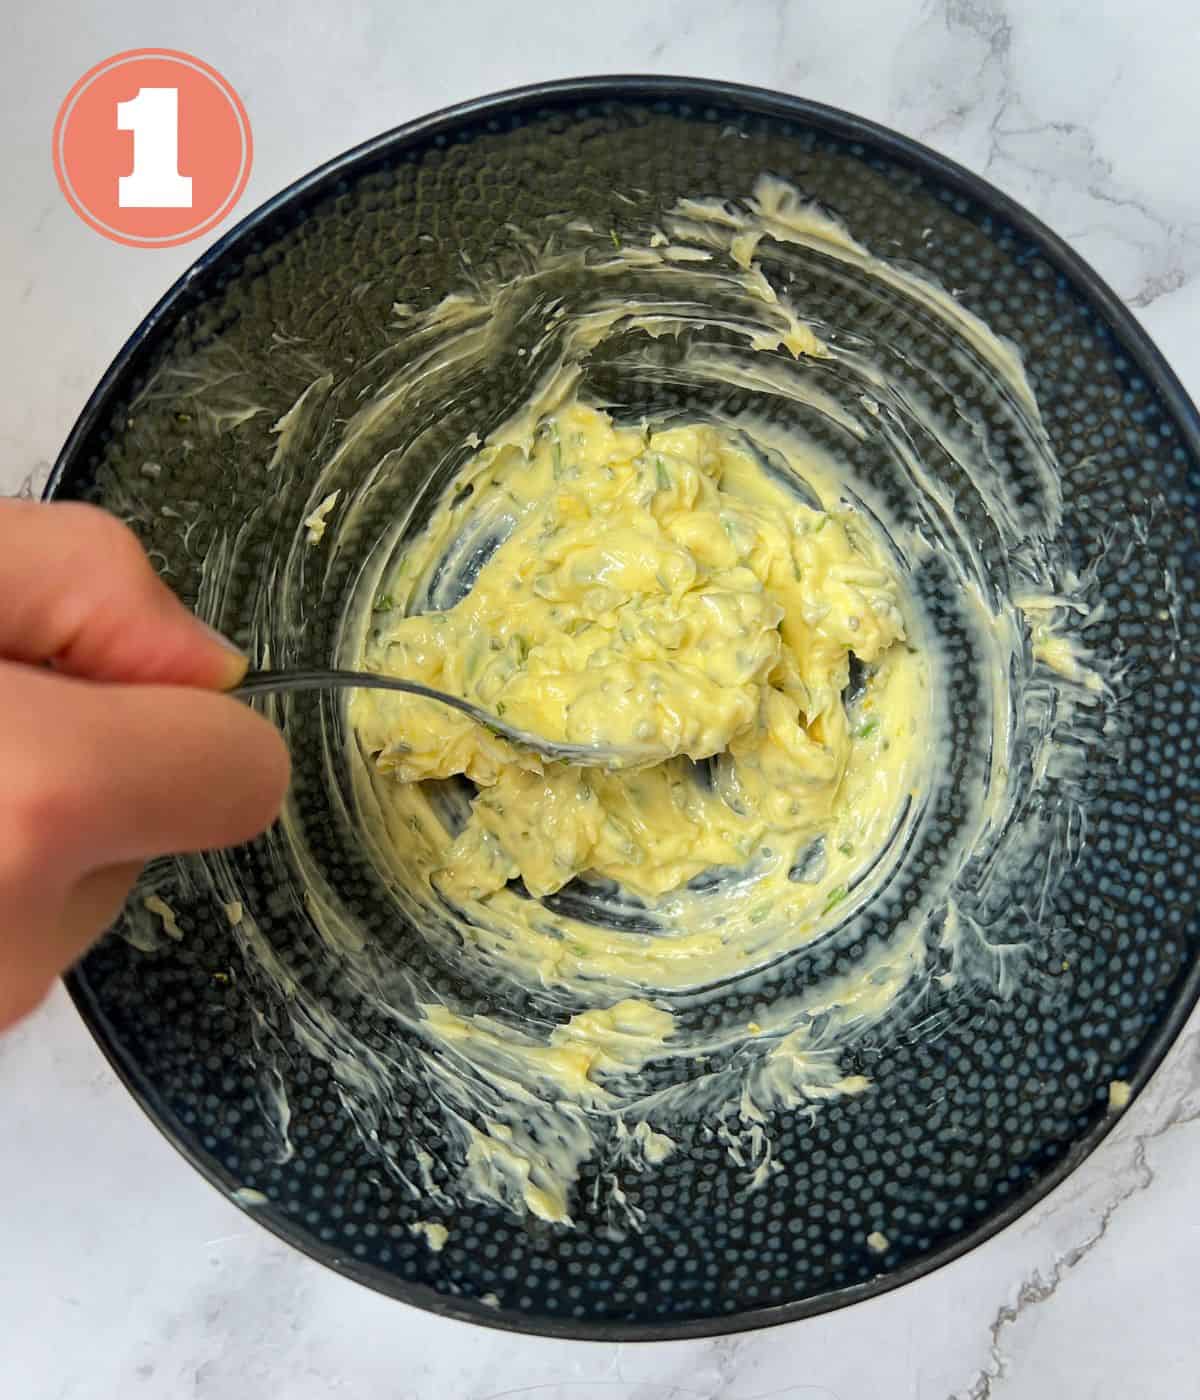 Garlic butter being stirred in a black bowl.